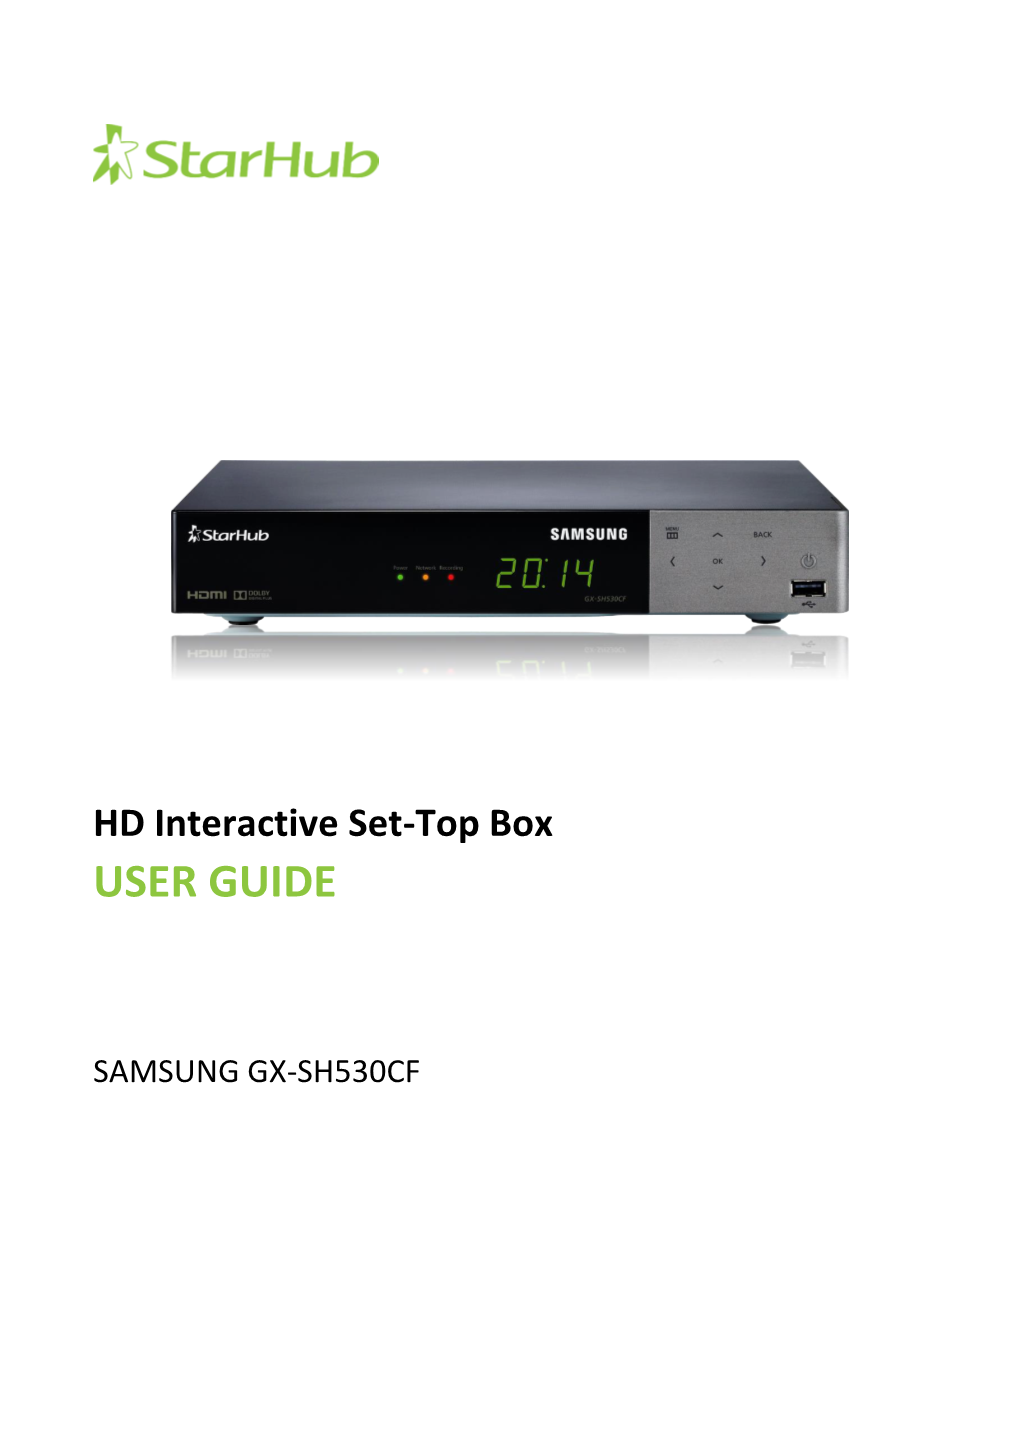 HD Interactive Set-Top Box USER GUIDE